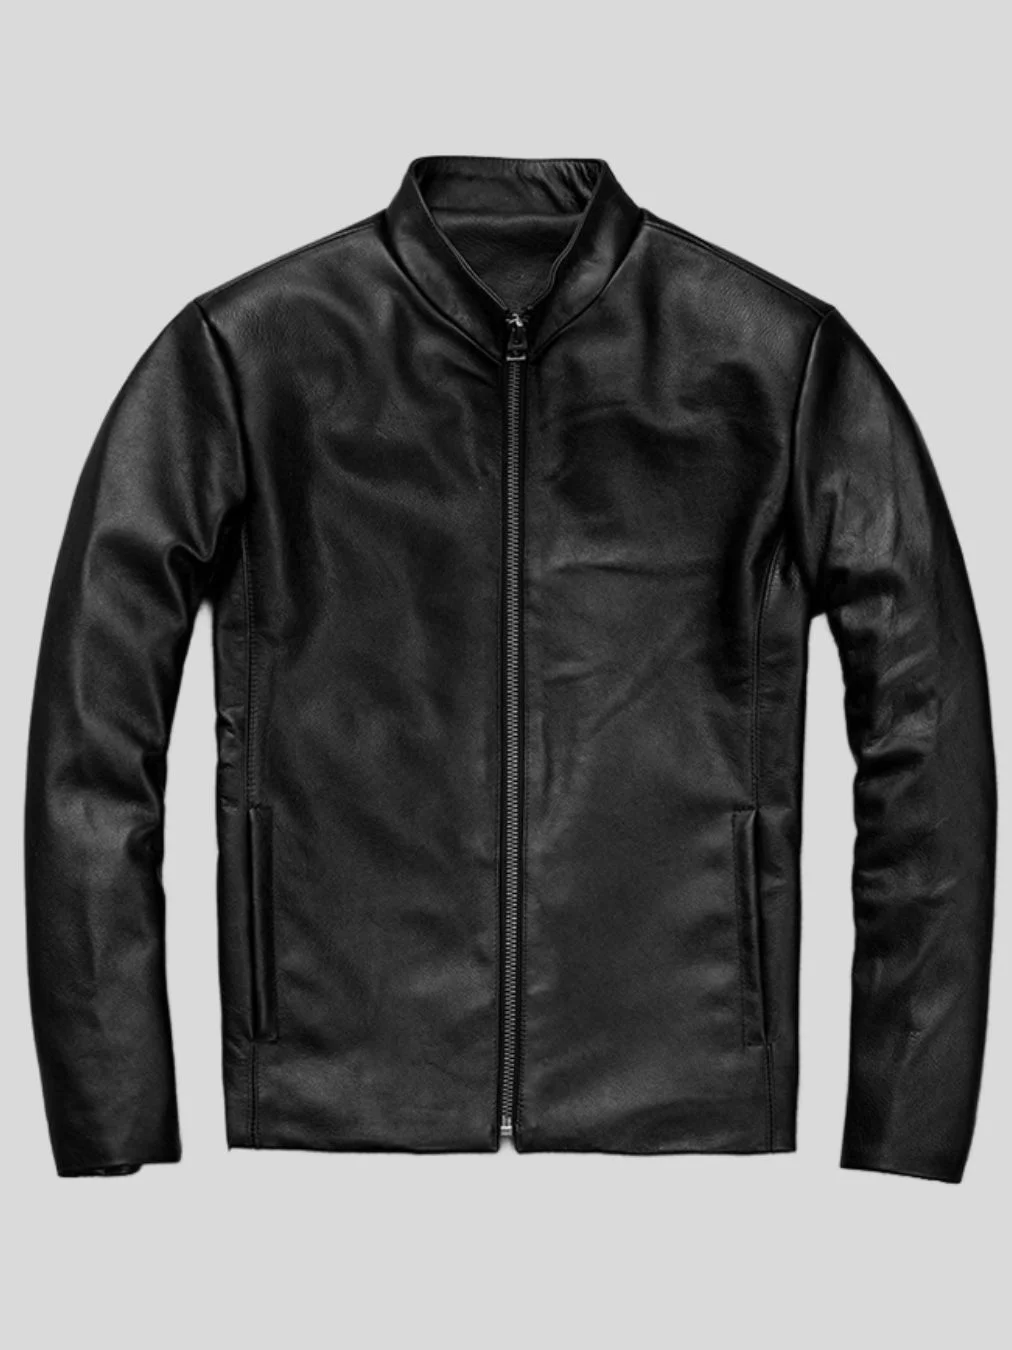 Men’s Black Café Racer Leather Jacket: Petone